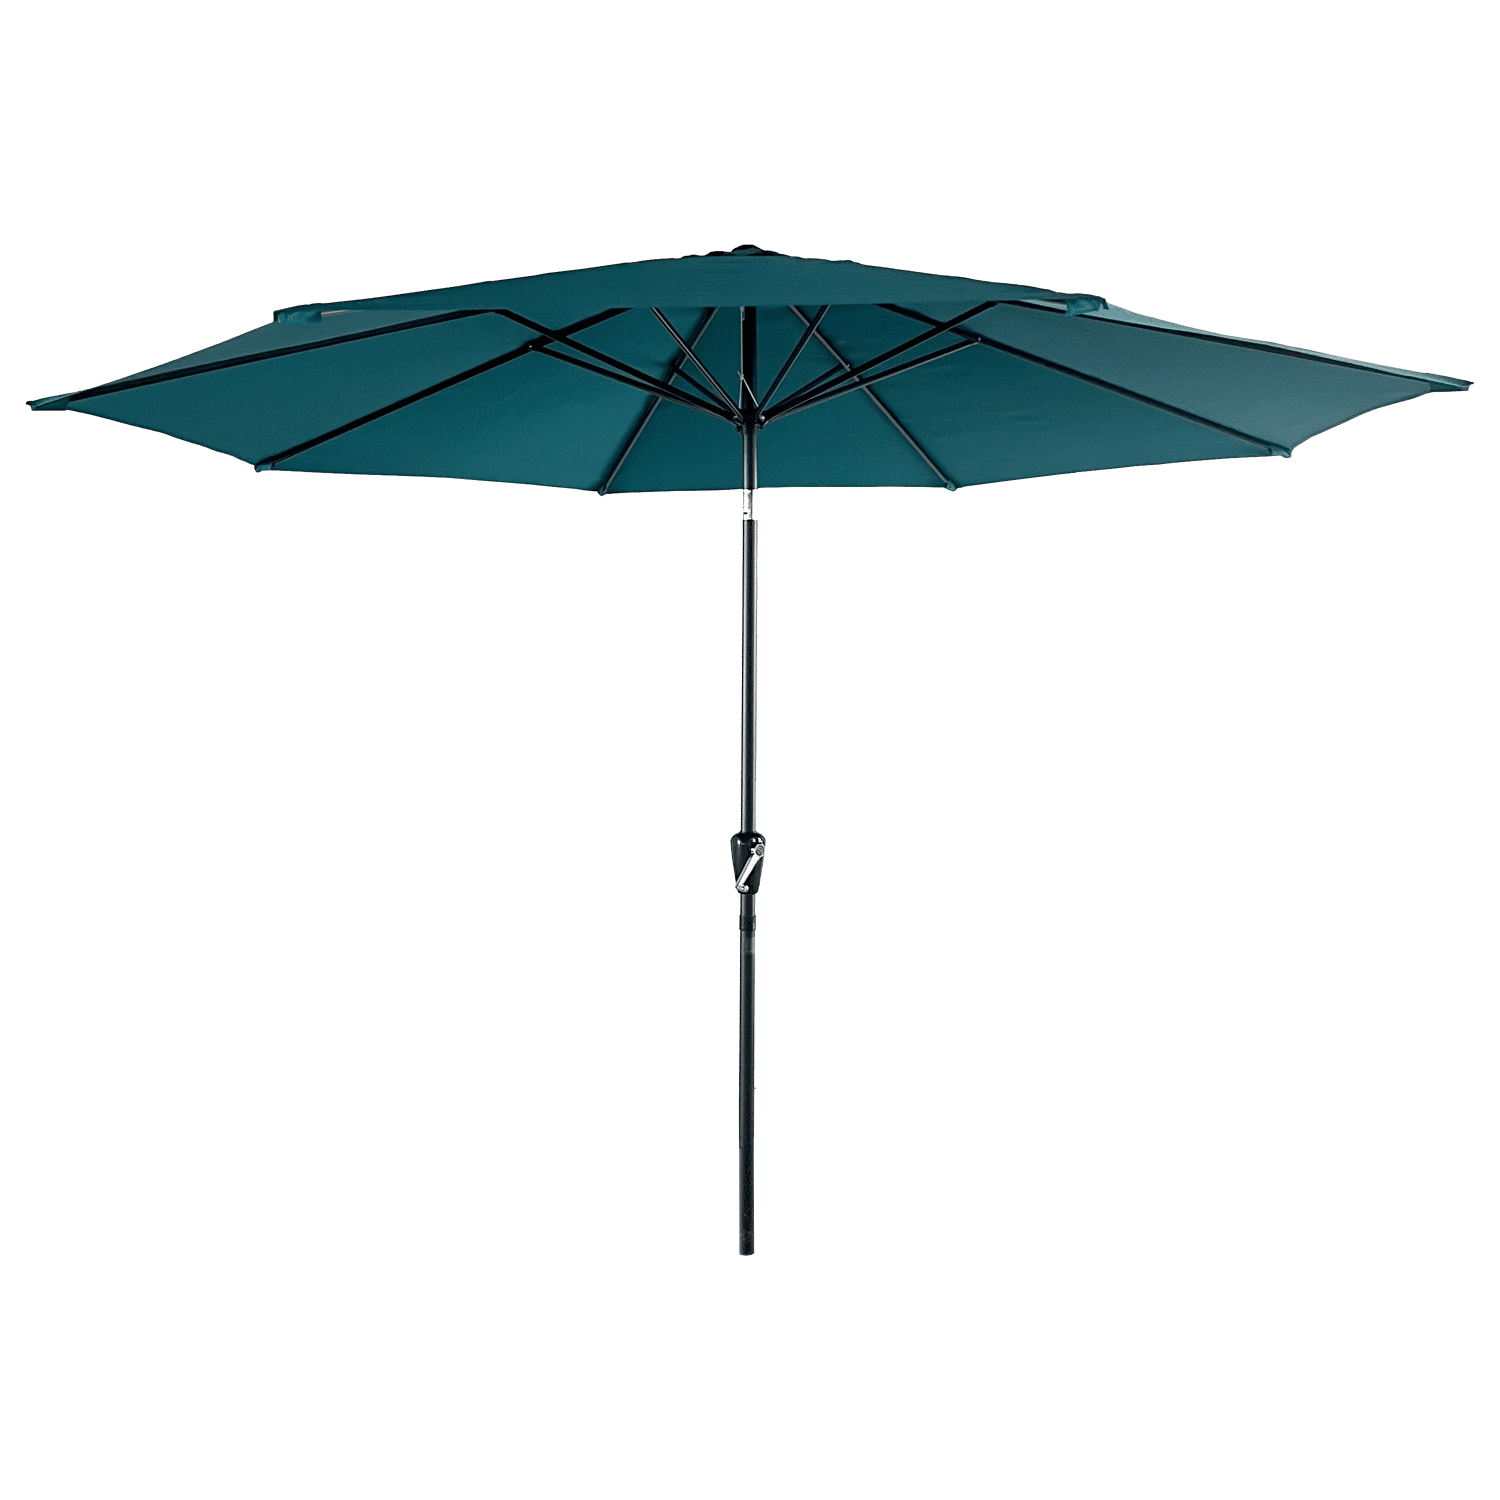 HAPUNA rechte ronde paraplu 3,30m diameter blauw